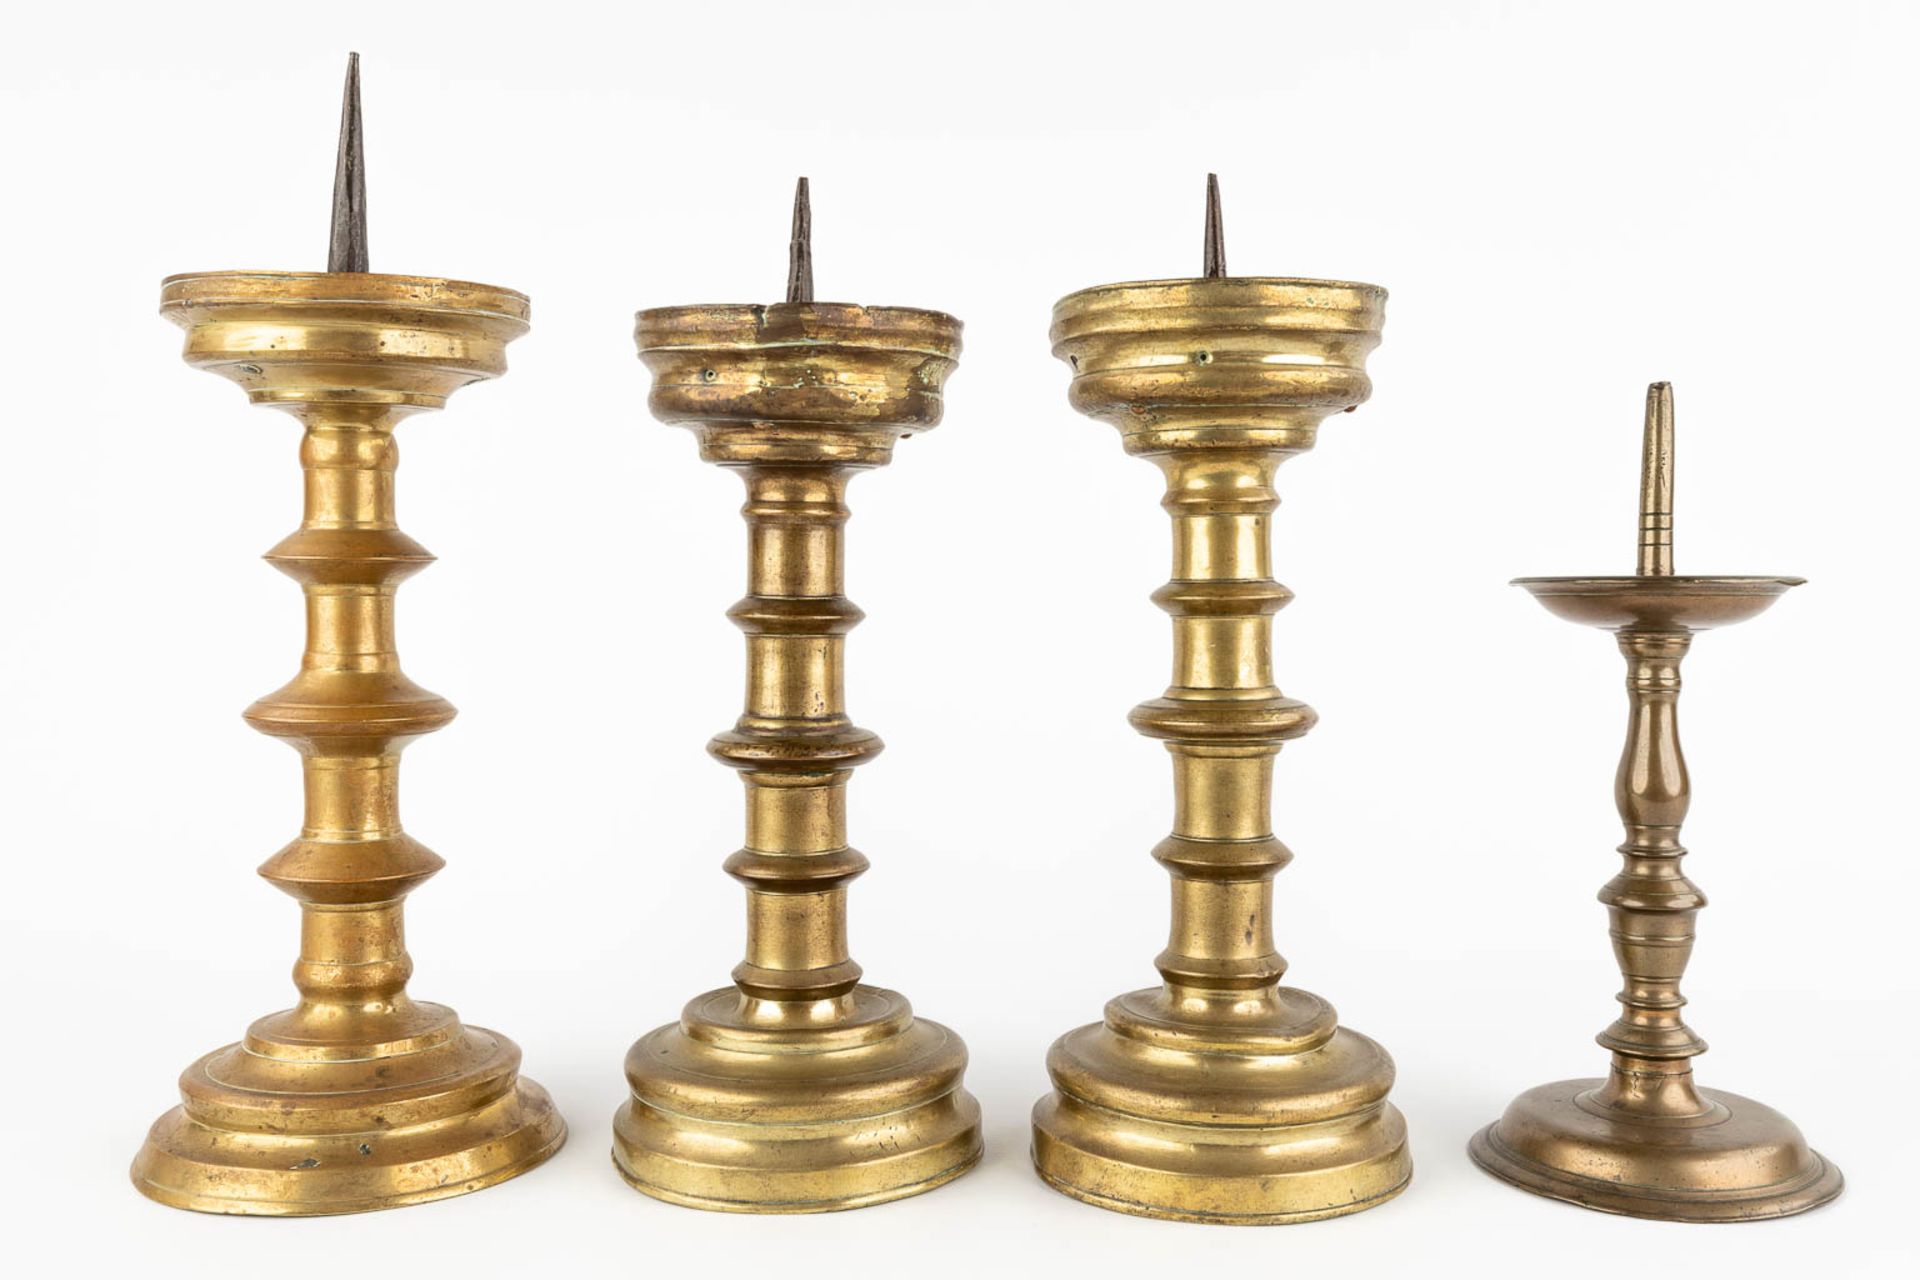 Four candlesticks, bronze, France and Germany, 17th-18th C. (H:36 x D:14 cm) - Bild 4 aus 11